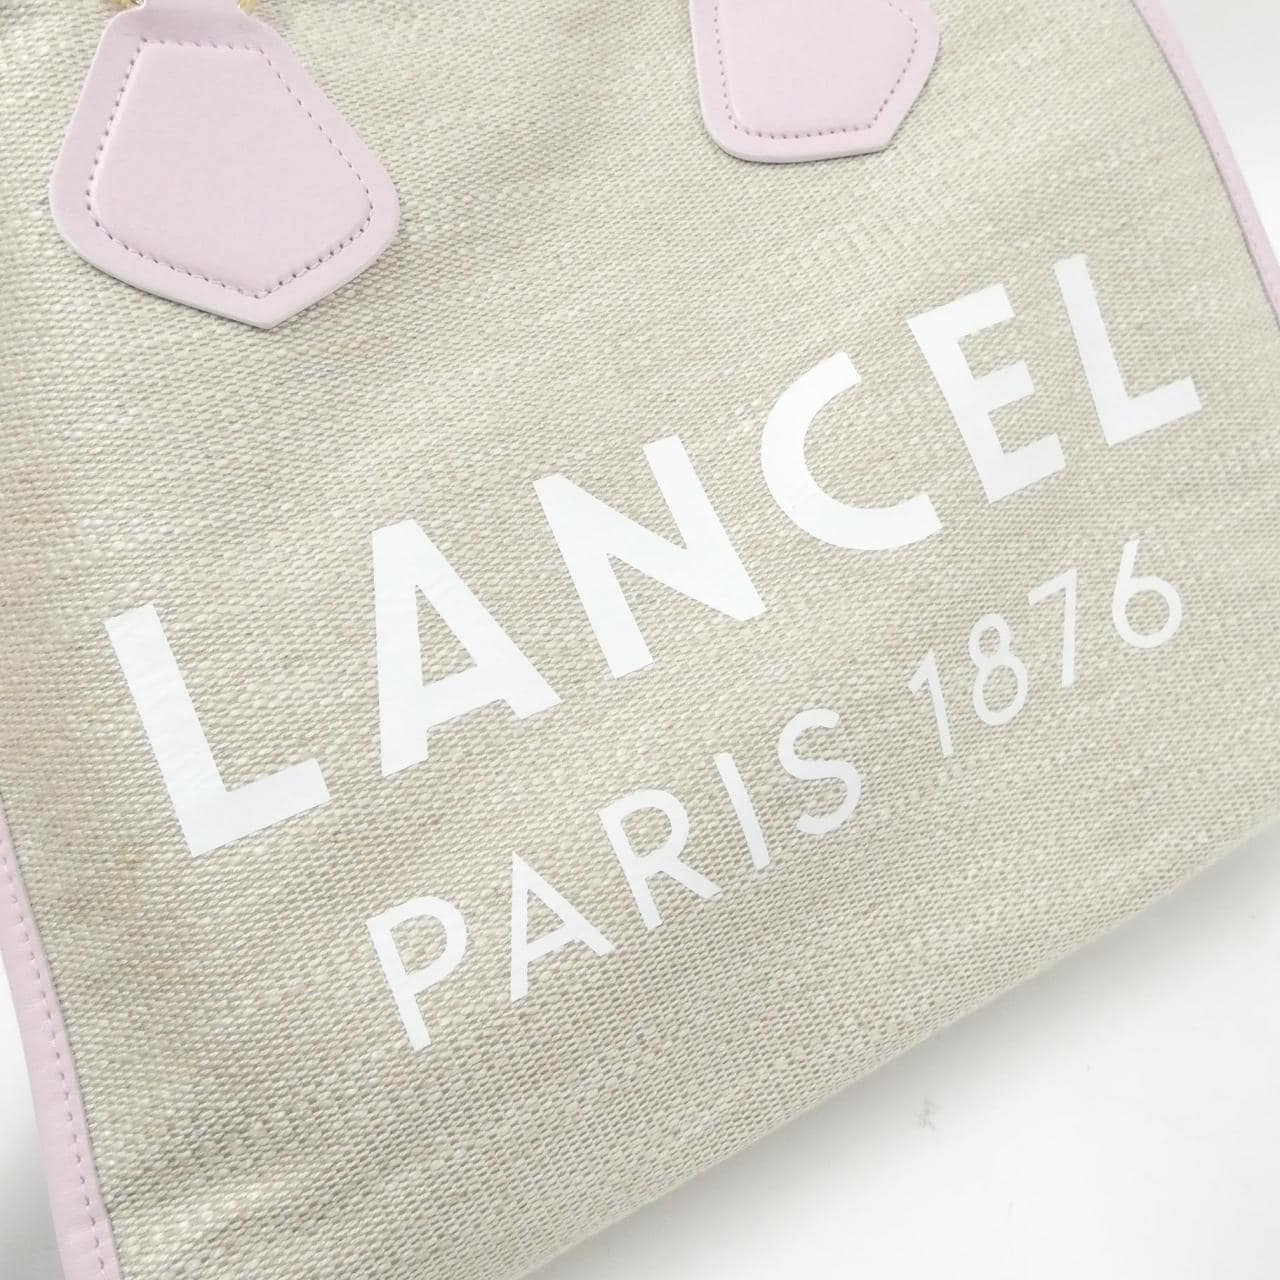 [BRAND NEW] Lancel A10749 Bag